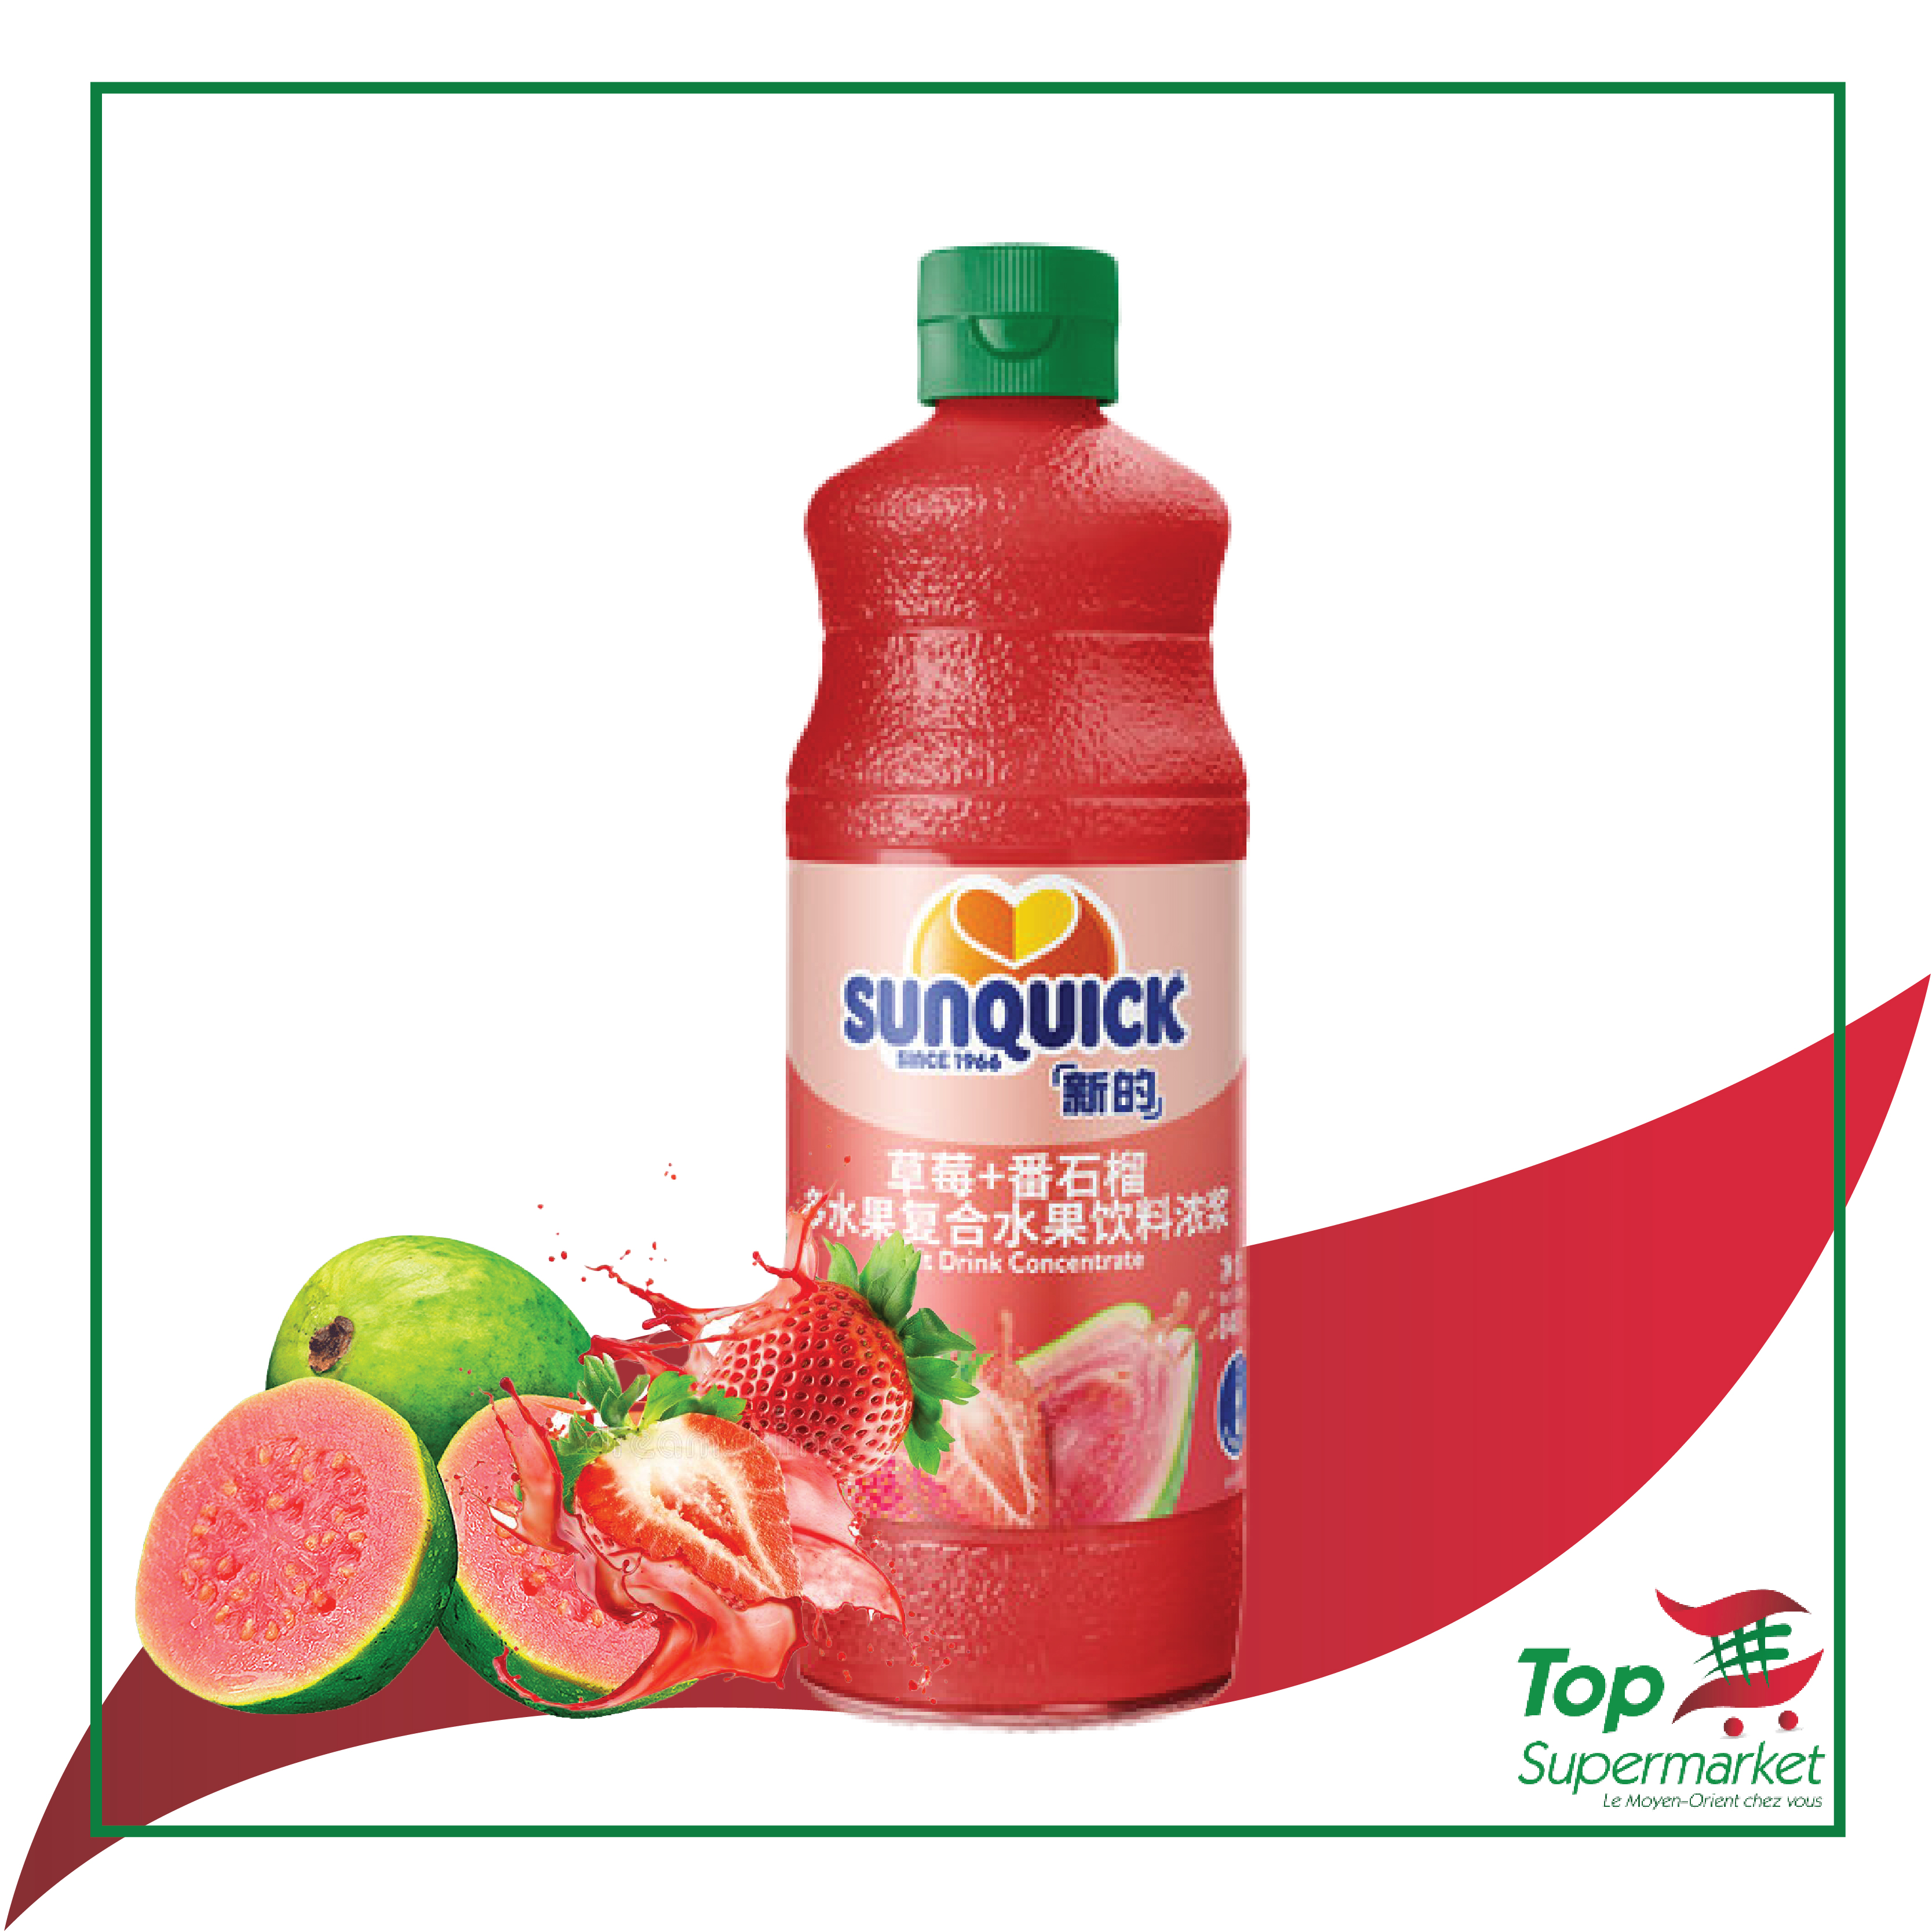 Sunquick sirop de guave & fraise 840ml